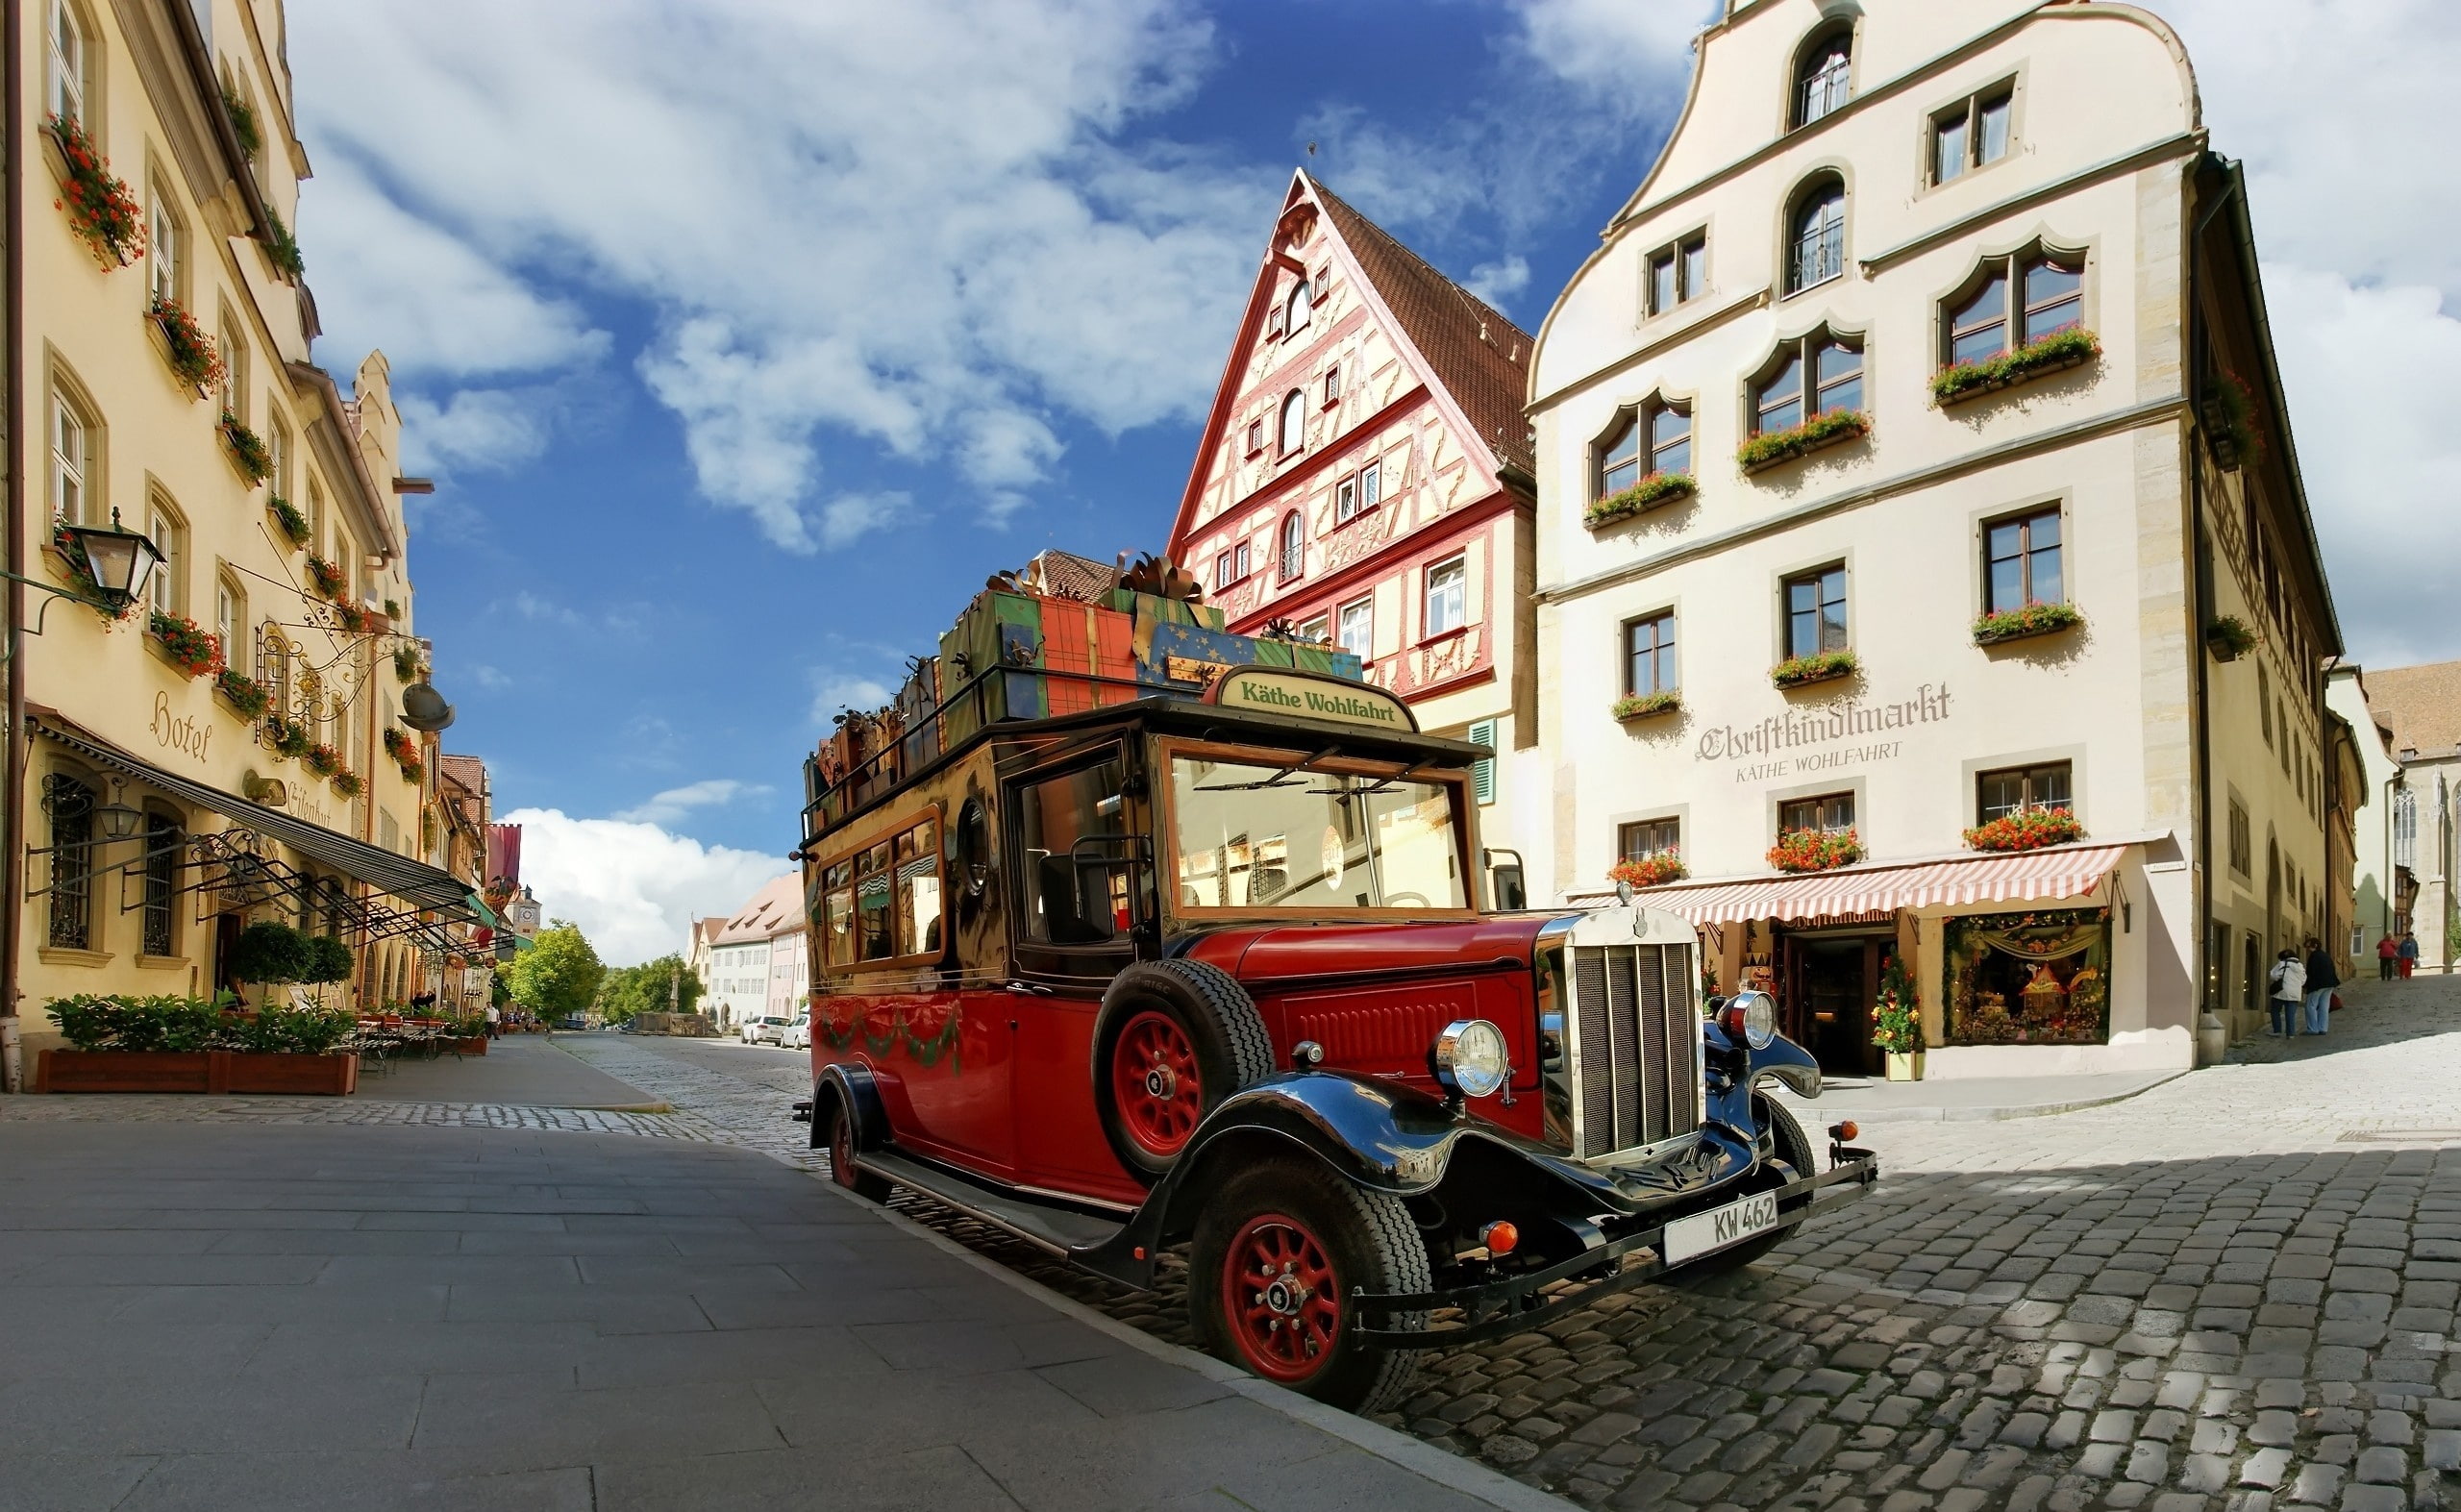 Kathe Wohlfahrt's Christmas Shop, vintage red car, Europe, Germany